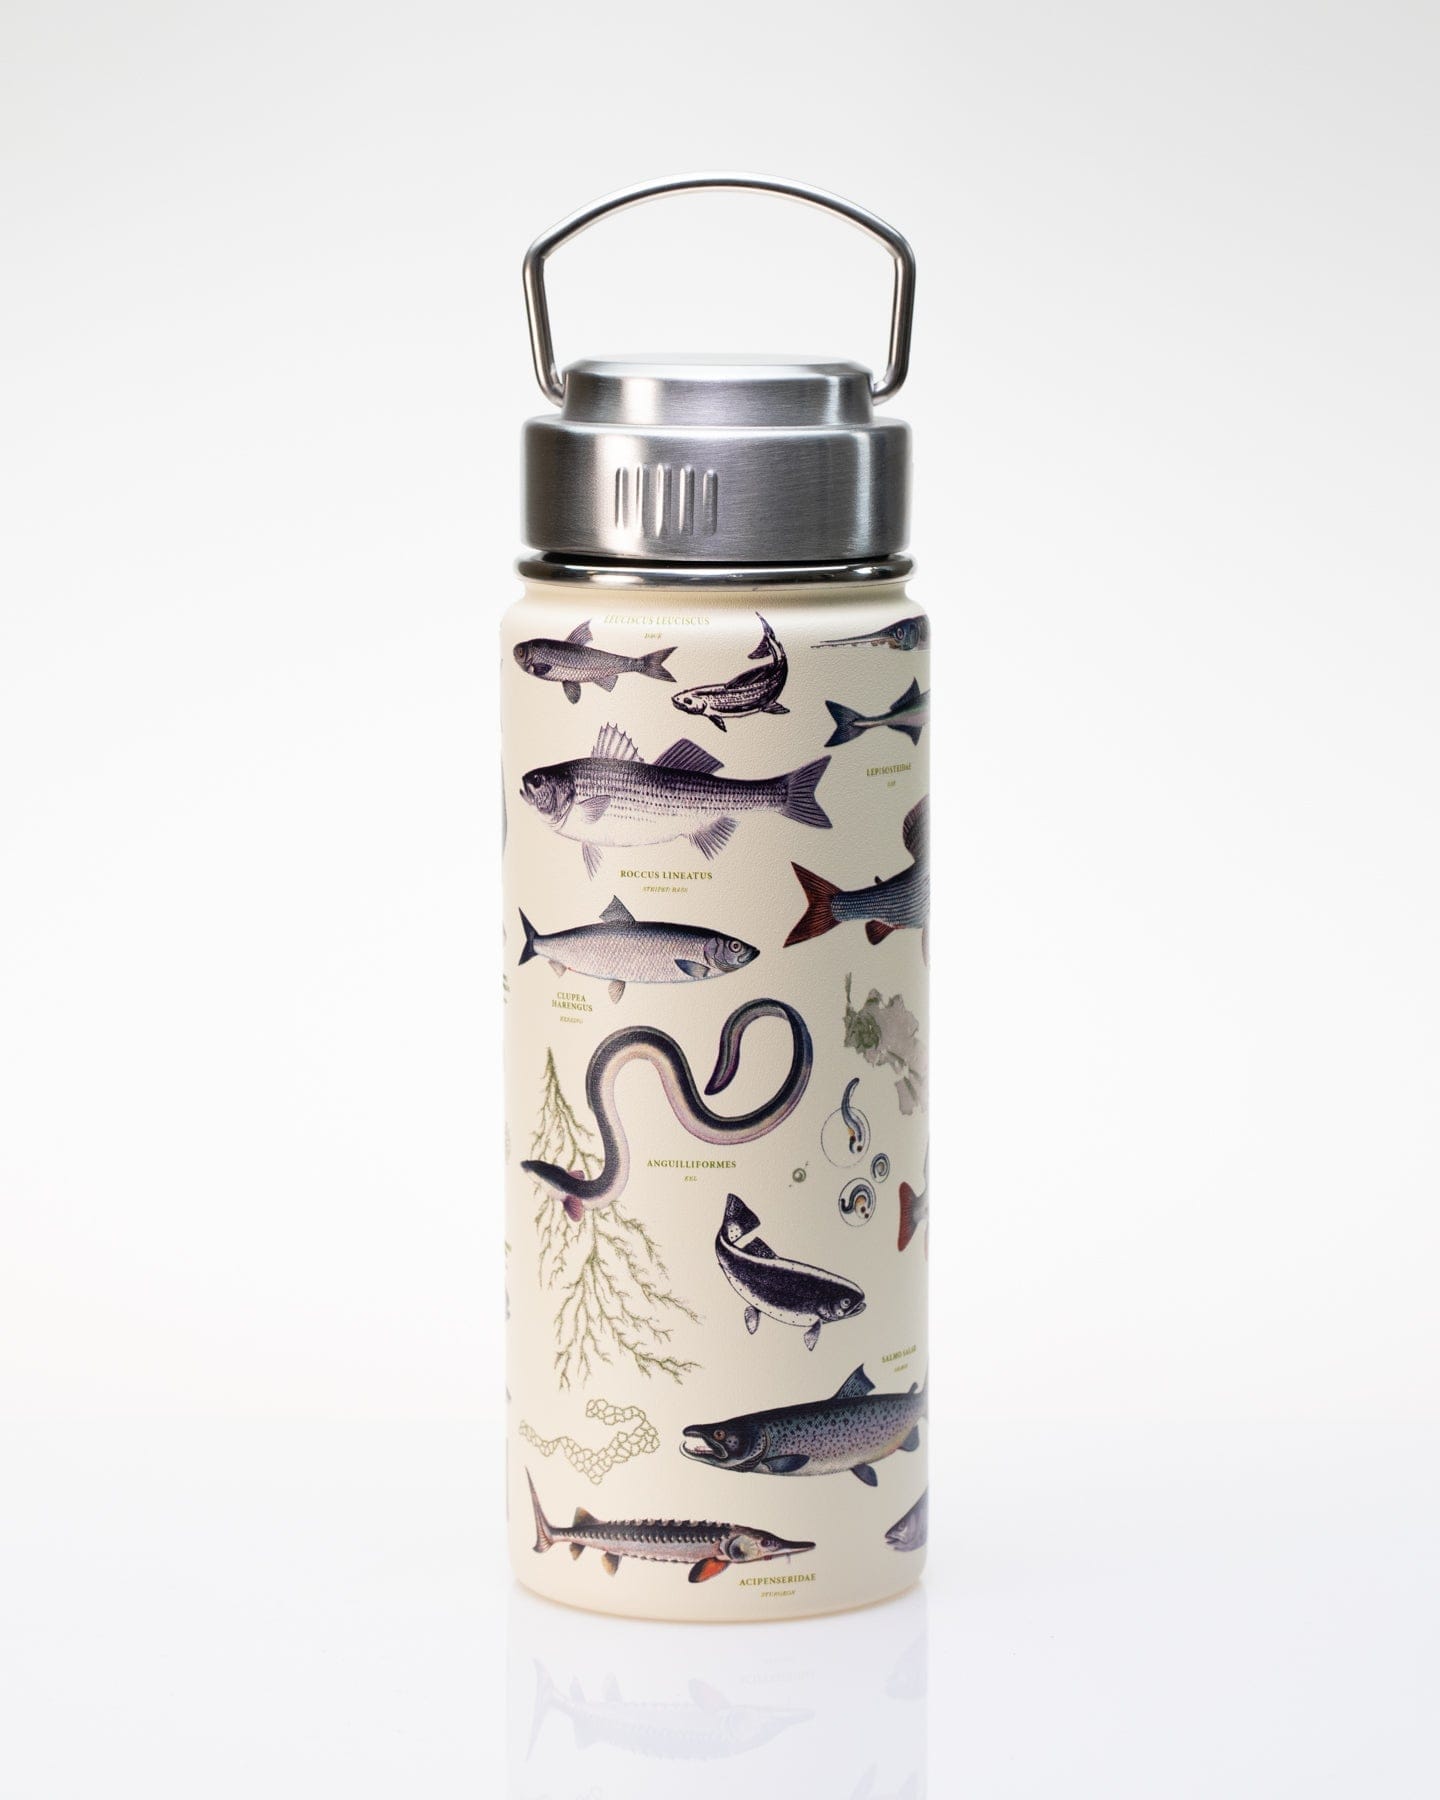 Arctic Heir 16oz Vacuum Flask Thermos w/ Tea Infuser & LED Digital